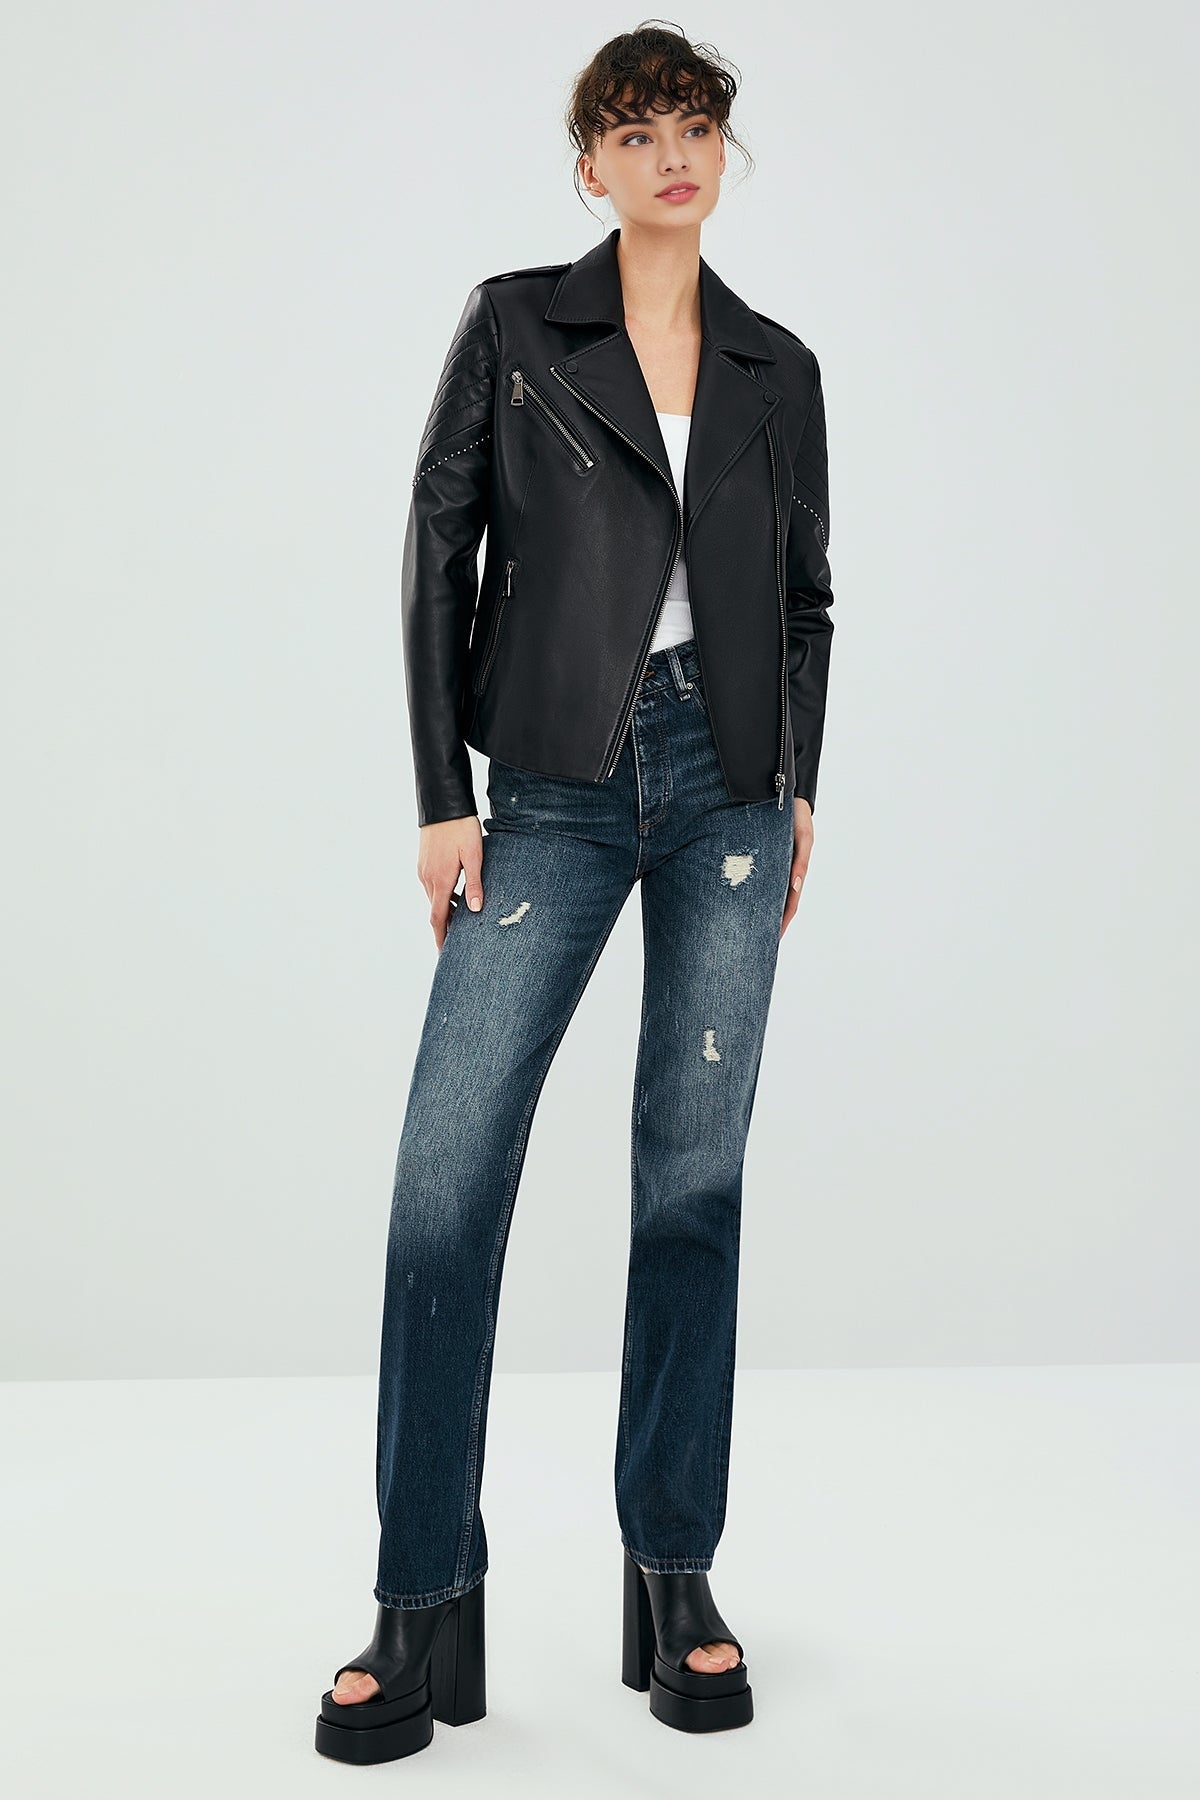 Kylie Women's Black Leather Jacket